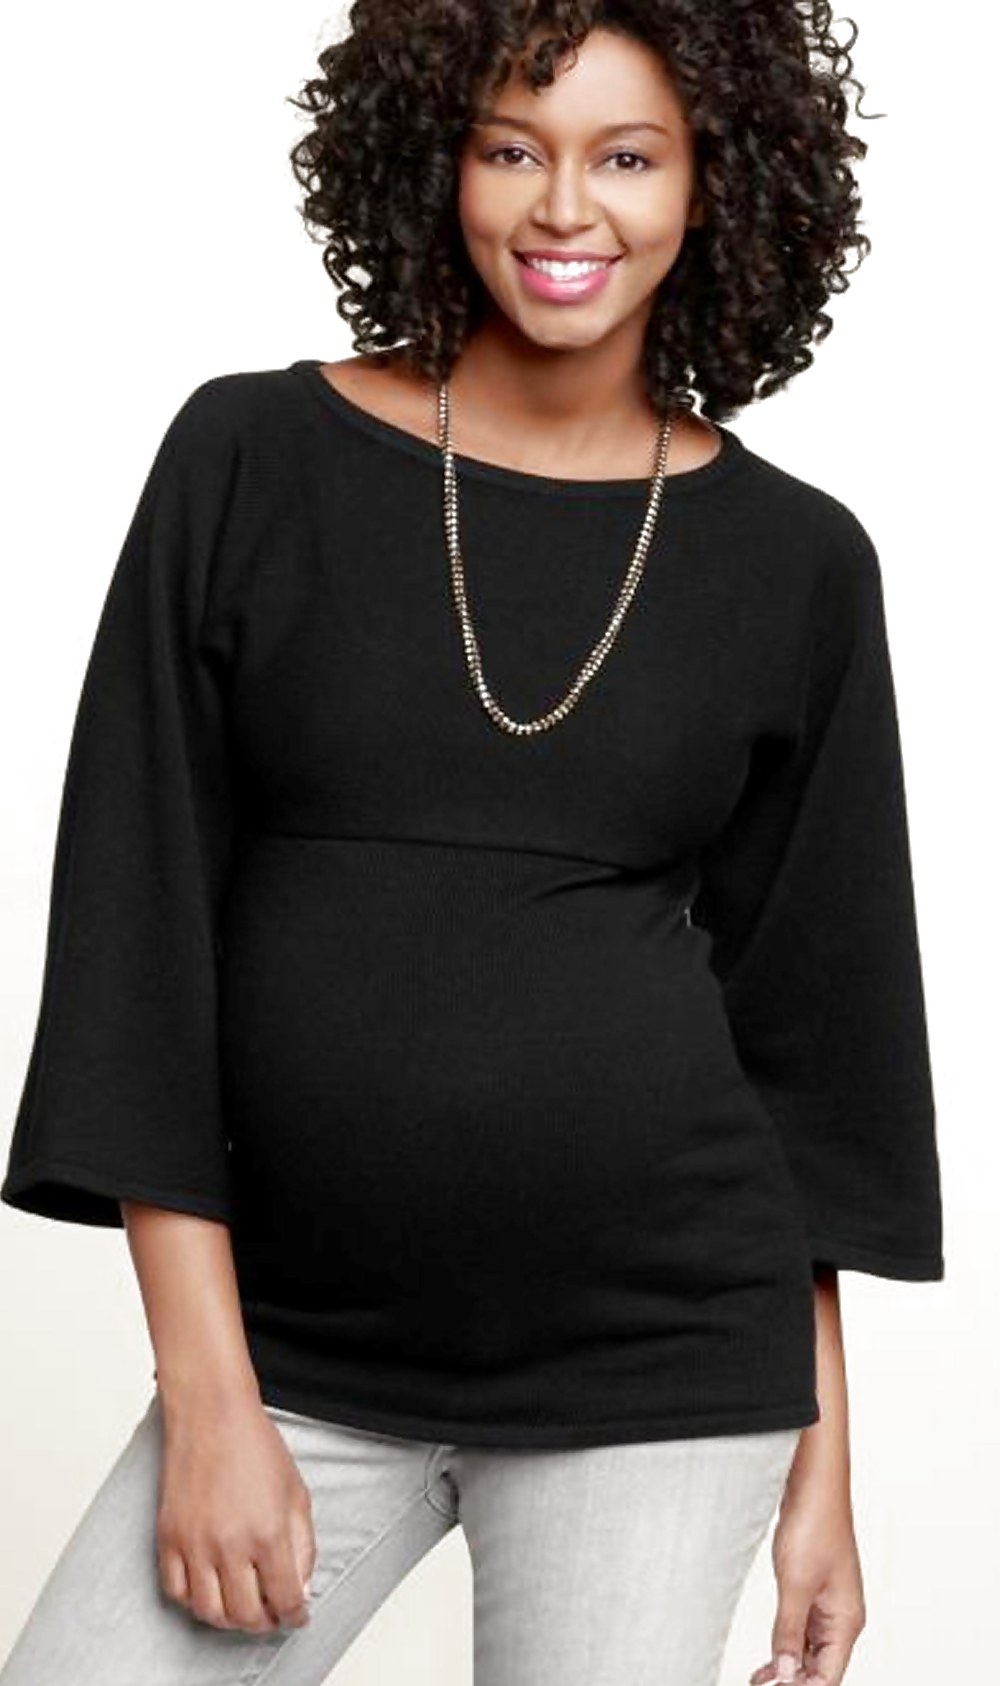 Sajata - Black Model's Maternity Work While Pregnant #16800400